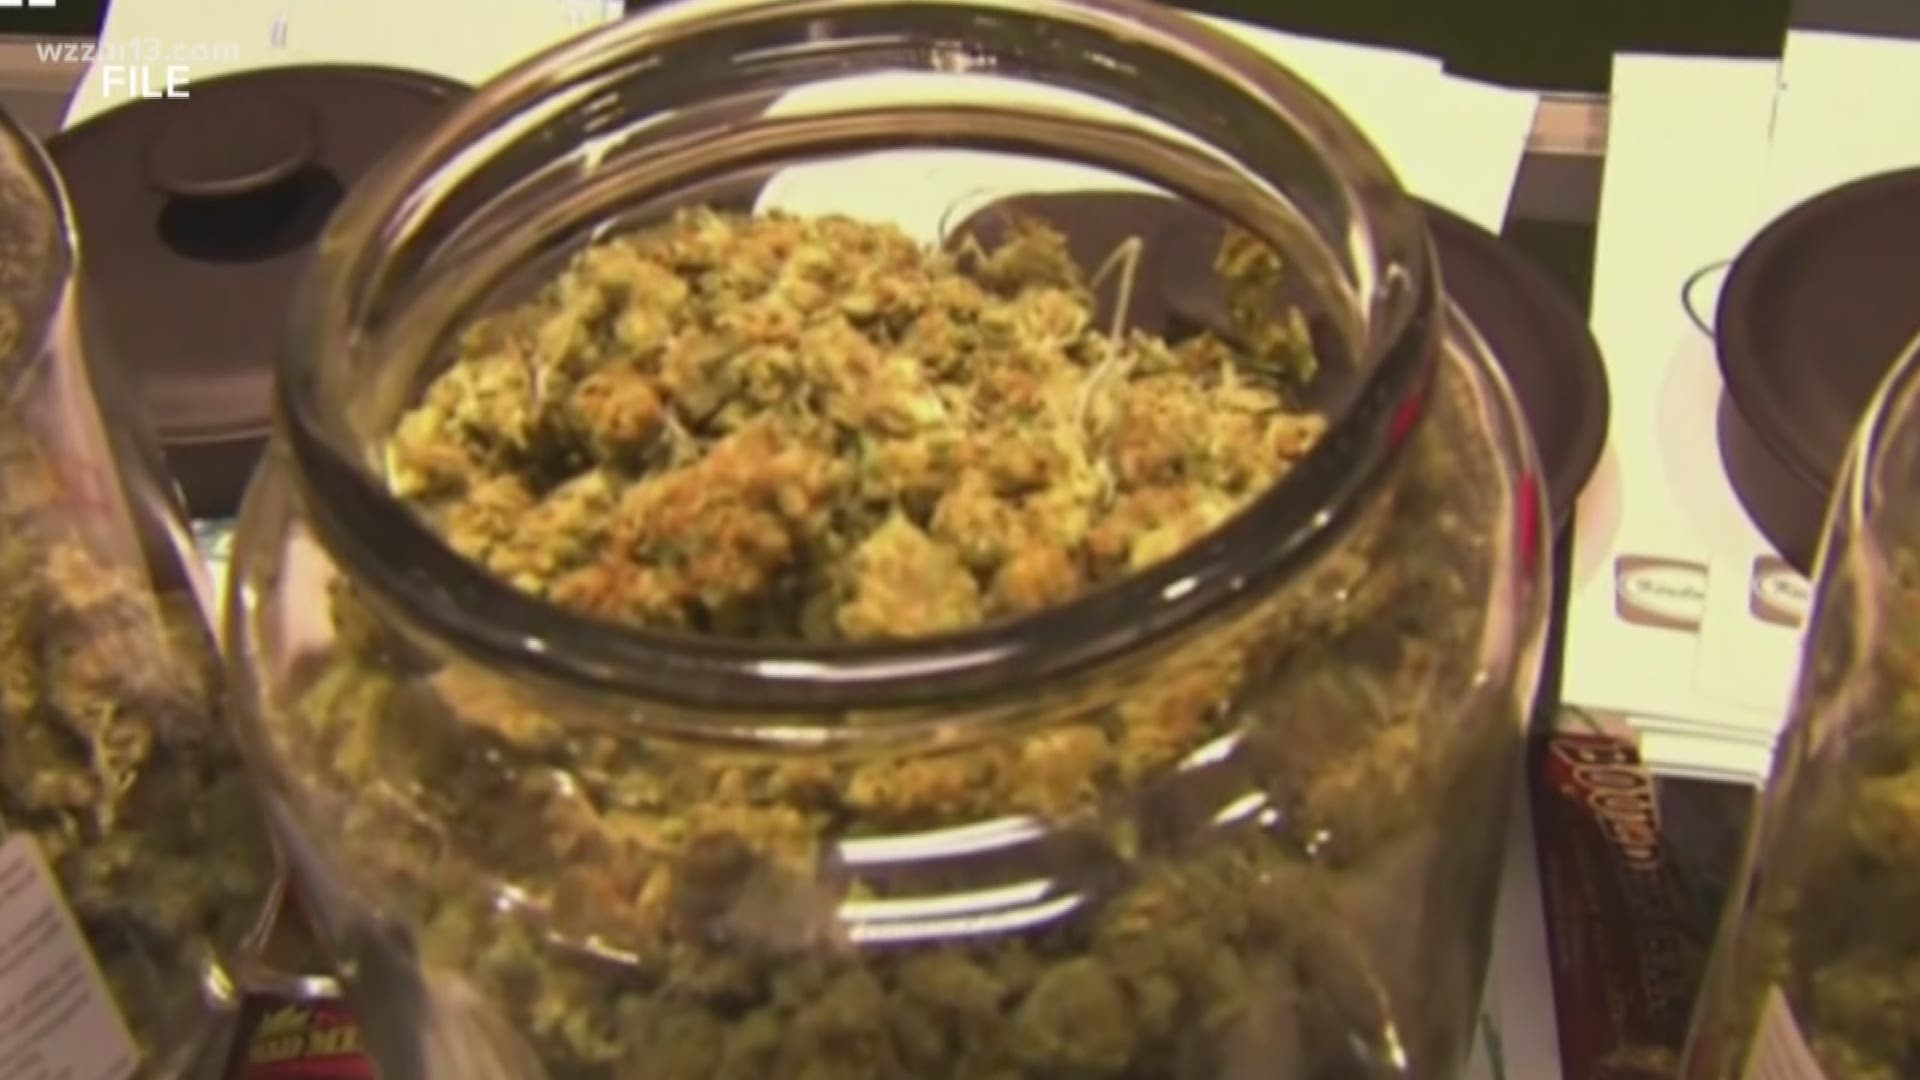 Proposal 1 legalizes recreational marijuana